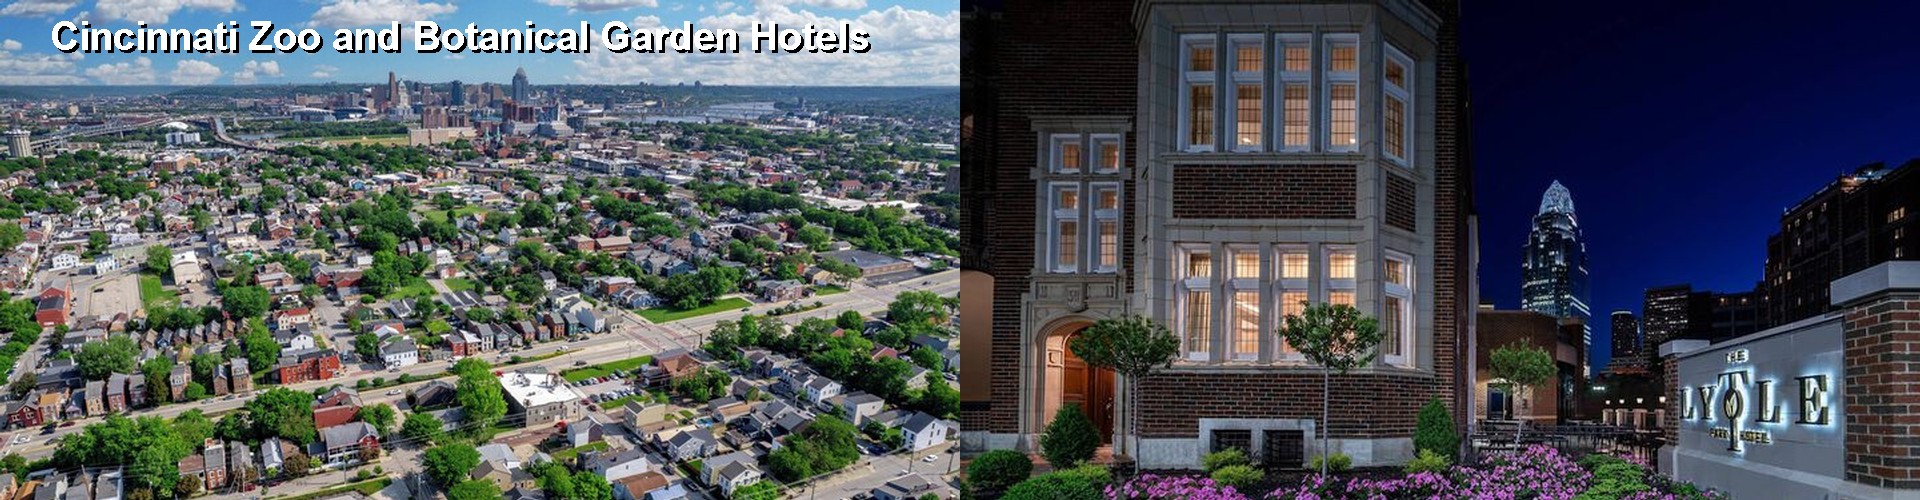 5 Best Hotels near Cincinnati Zoo and Botanical Garden